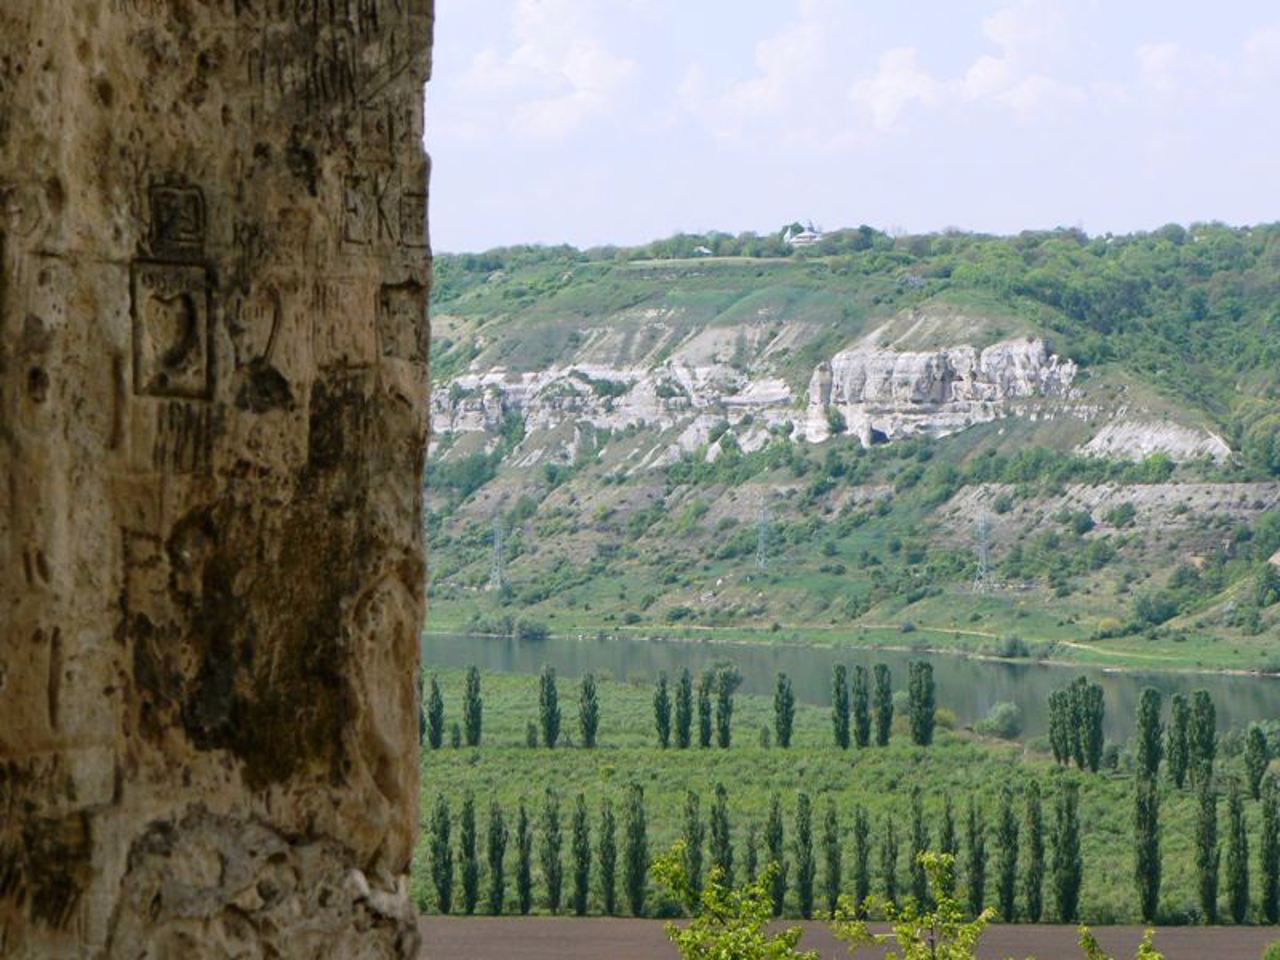 Liadova Useknovenskiy Rock Monastery